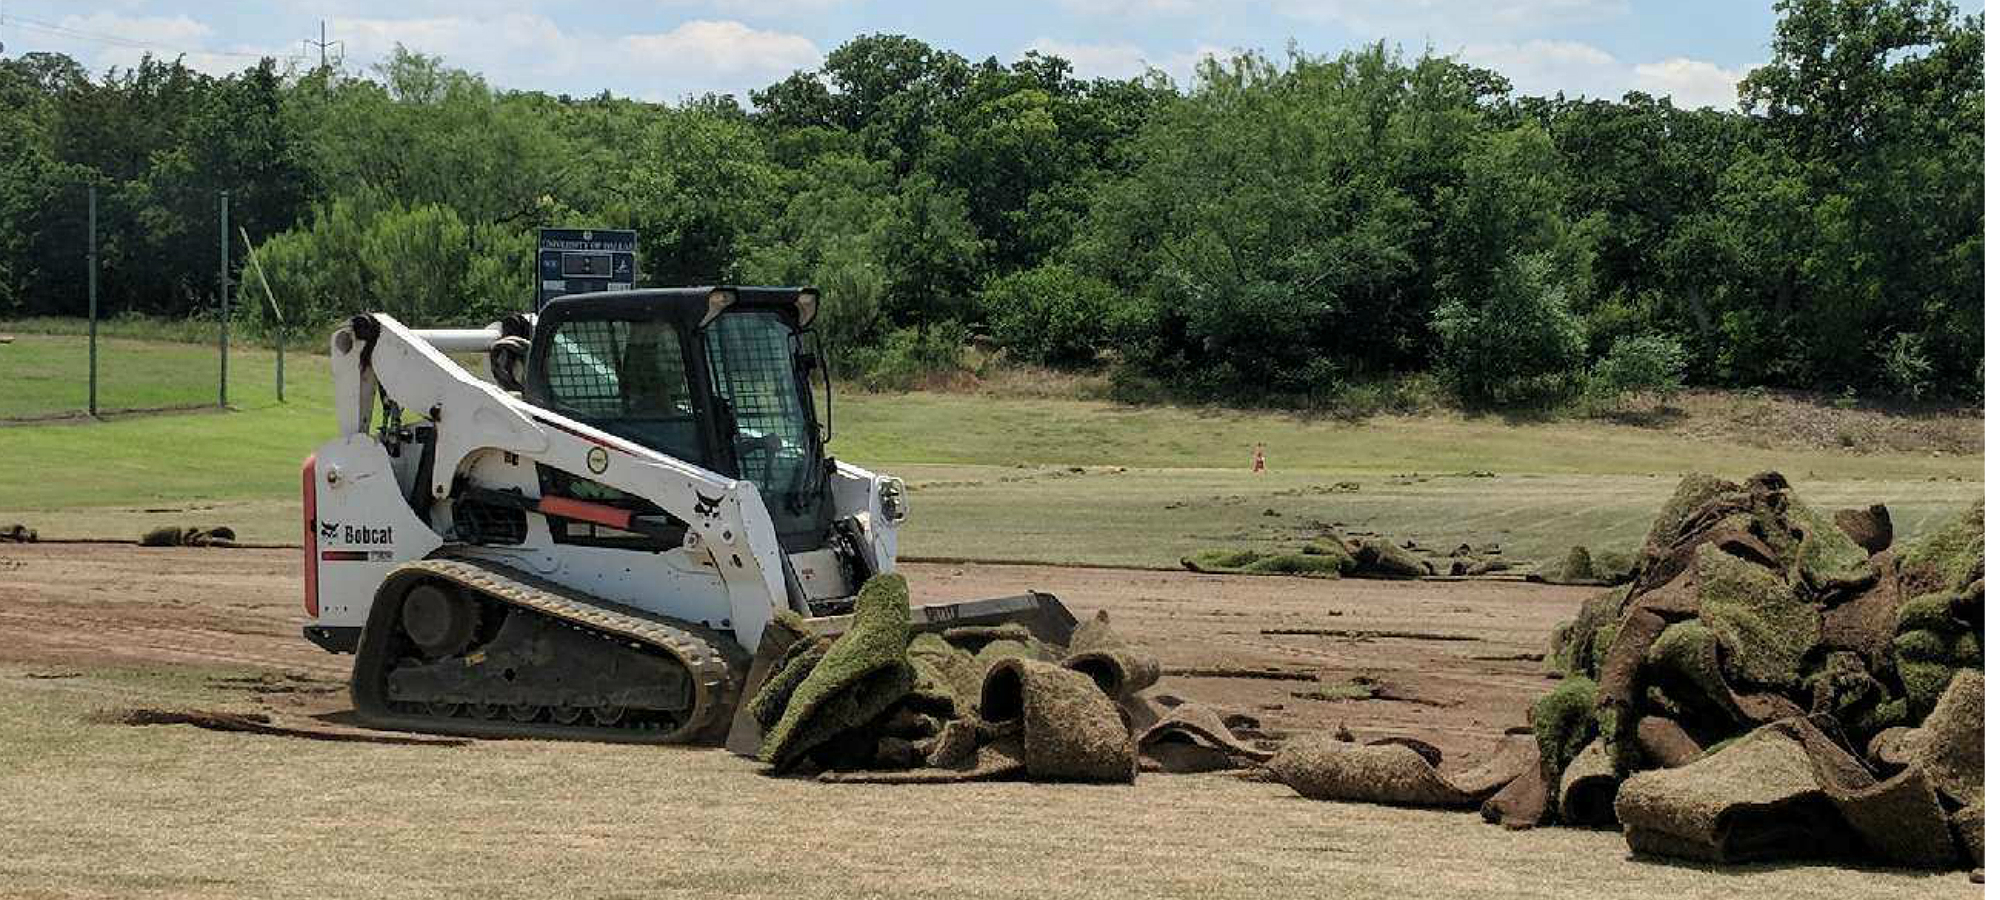 Construction Begins on New Soccer Field for 2018 Season